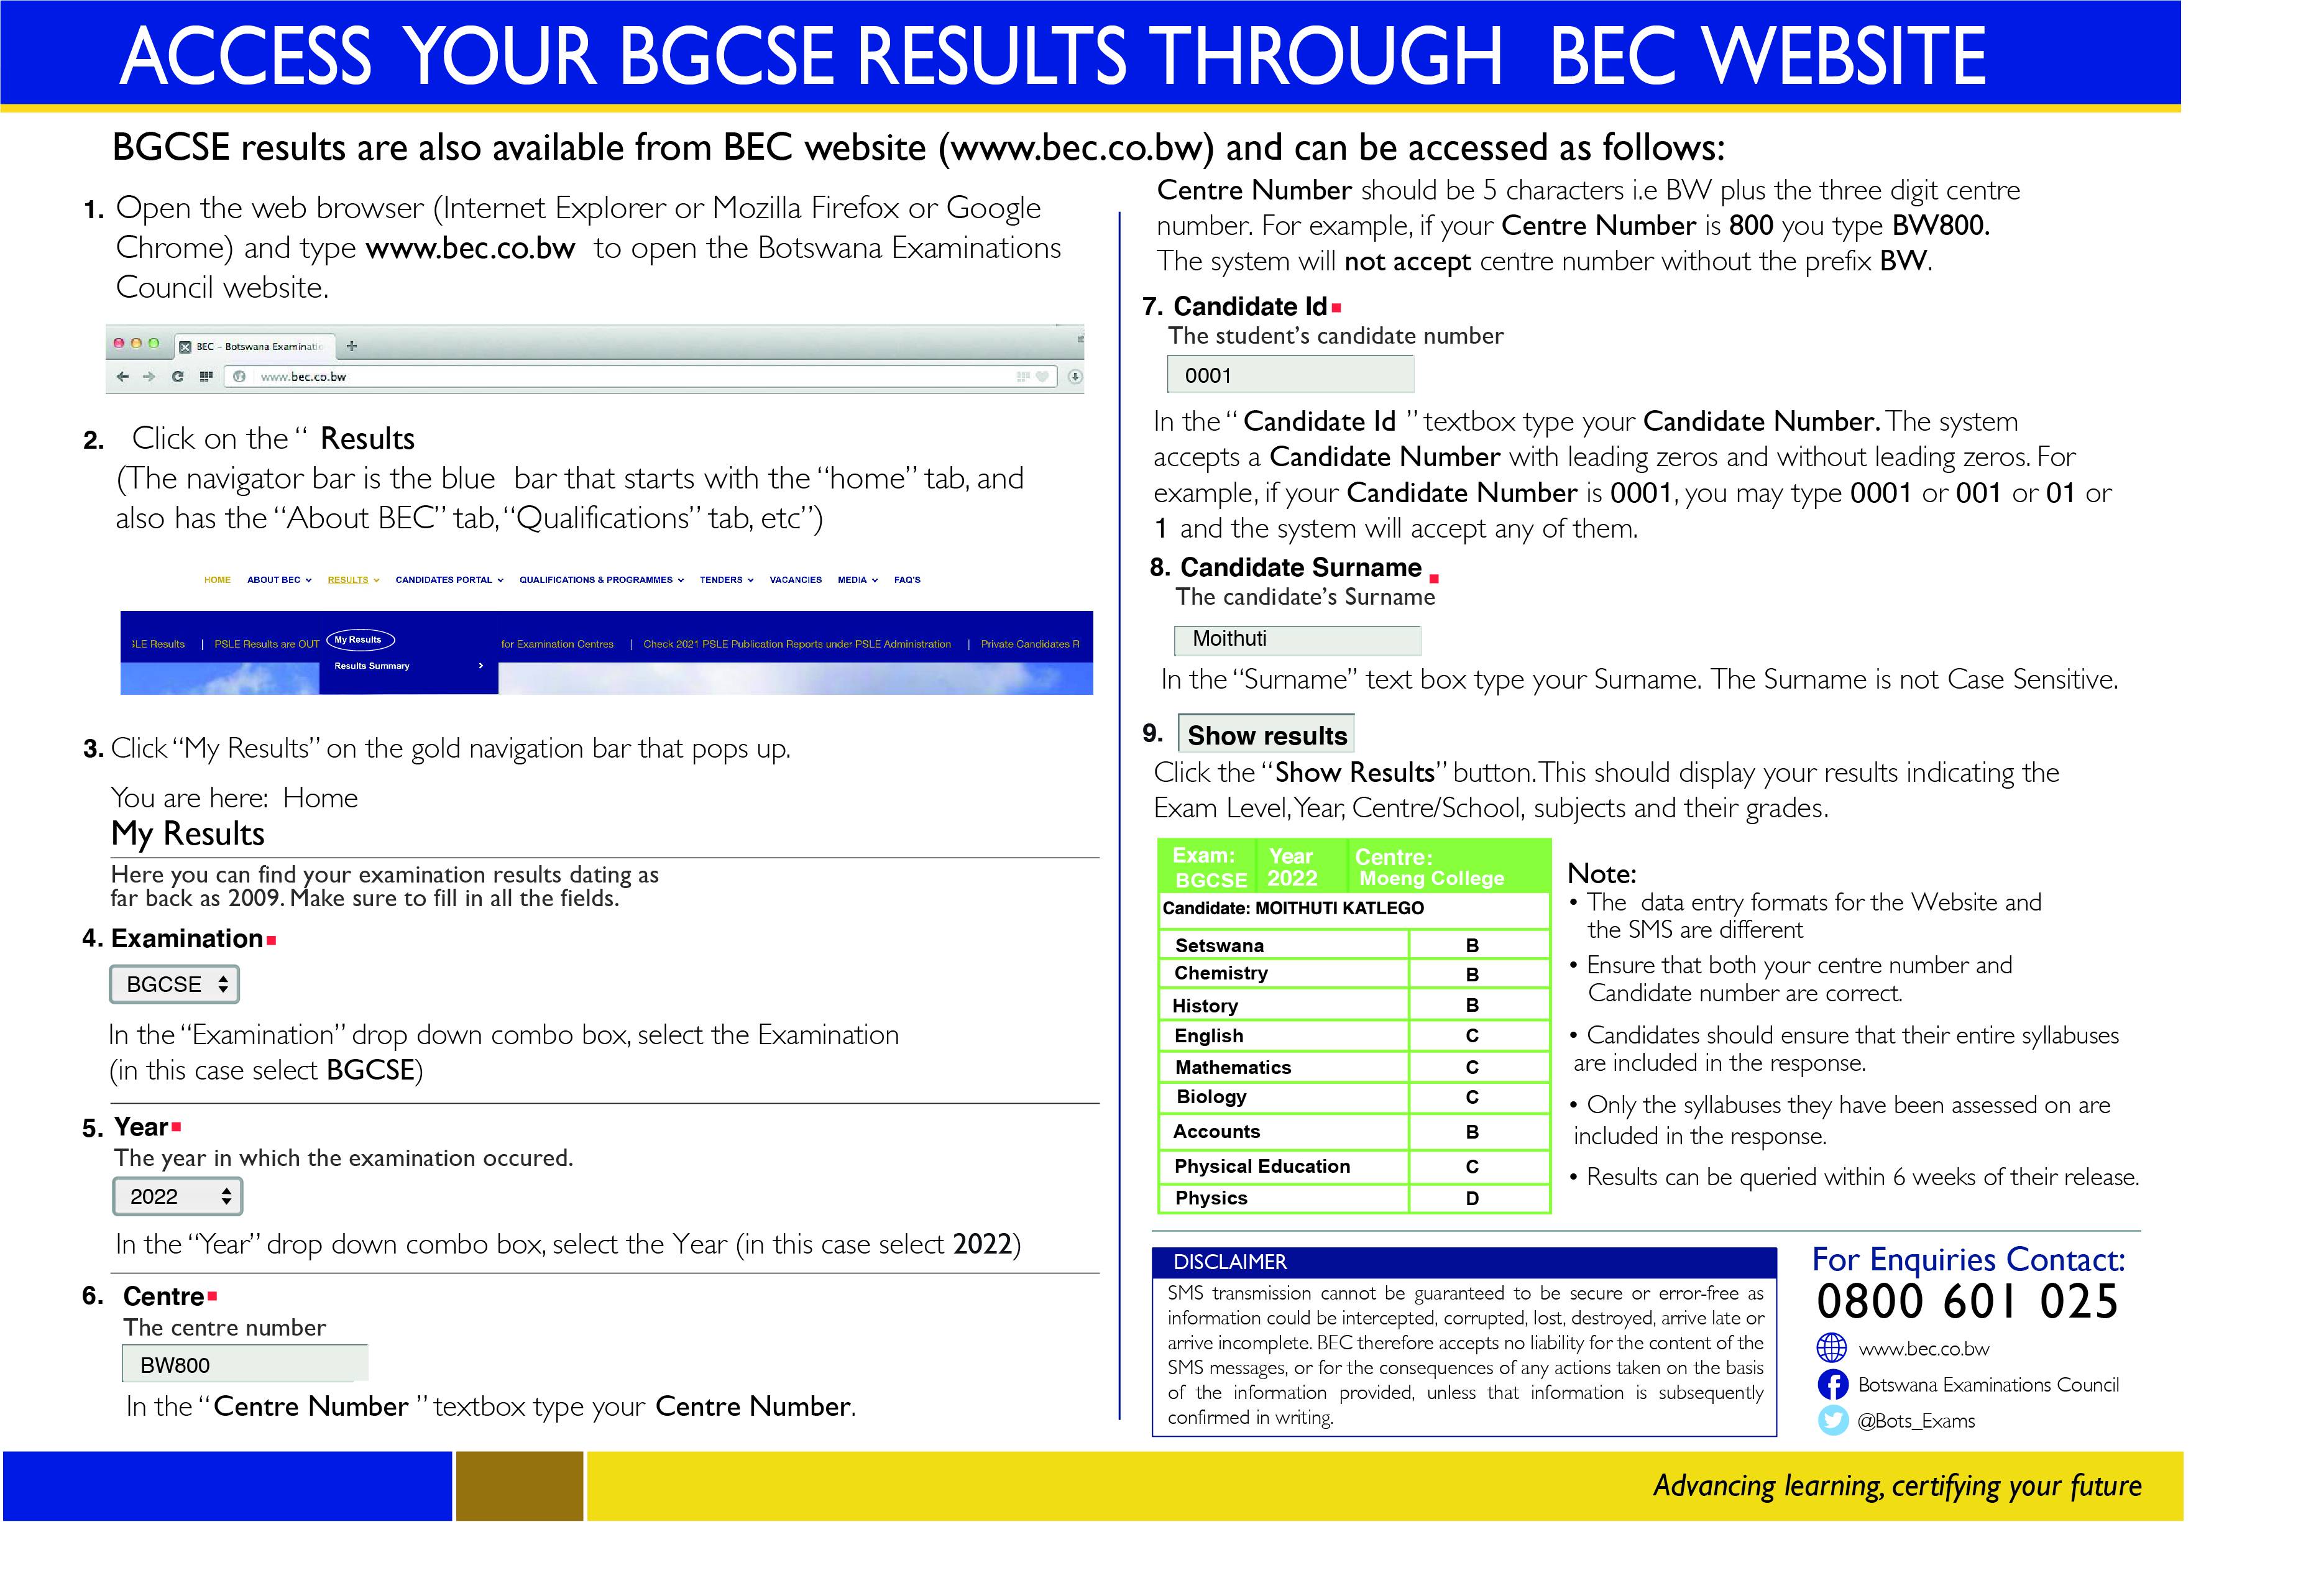 2022_BGCSE_how_to_access_website_copy.jpg